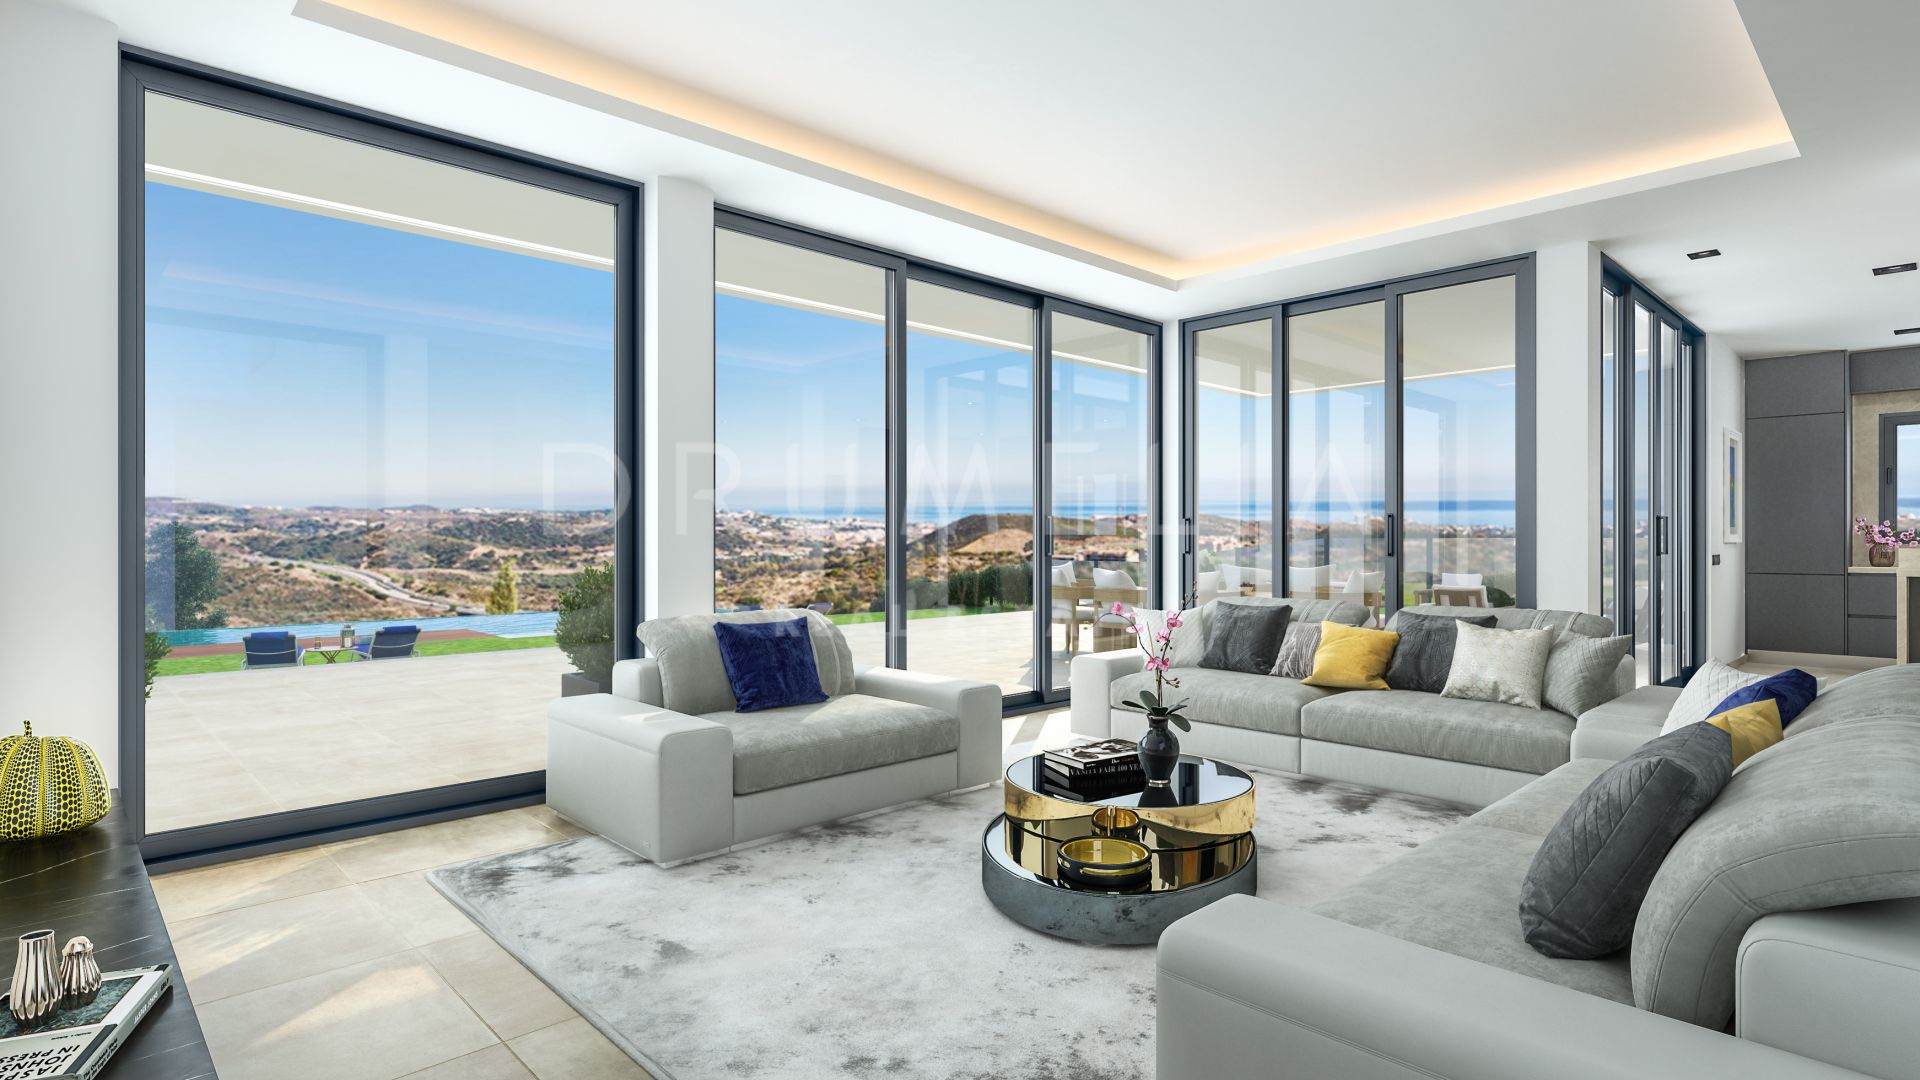 Brand-new contemporary style villa with sea views close to golf course in La Cala de Mijas, east of Marbella